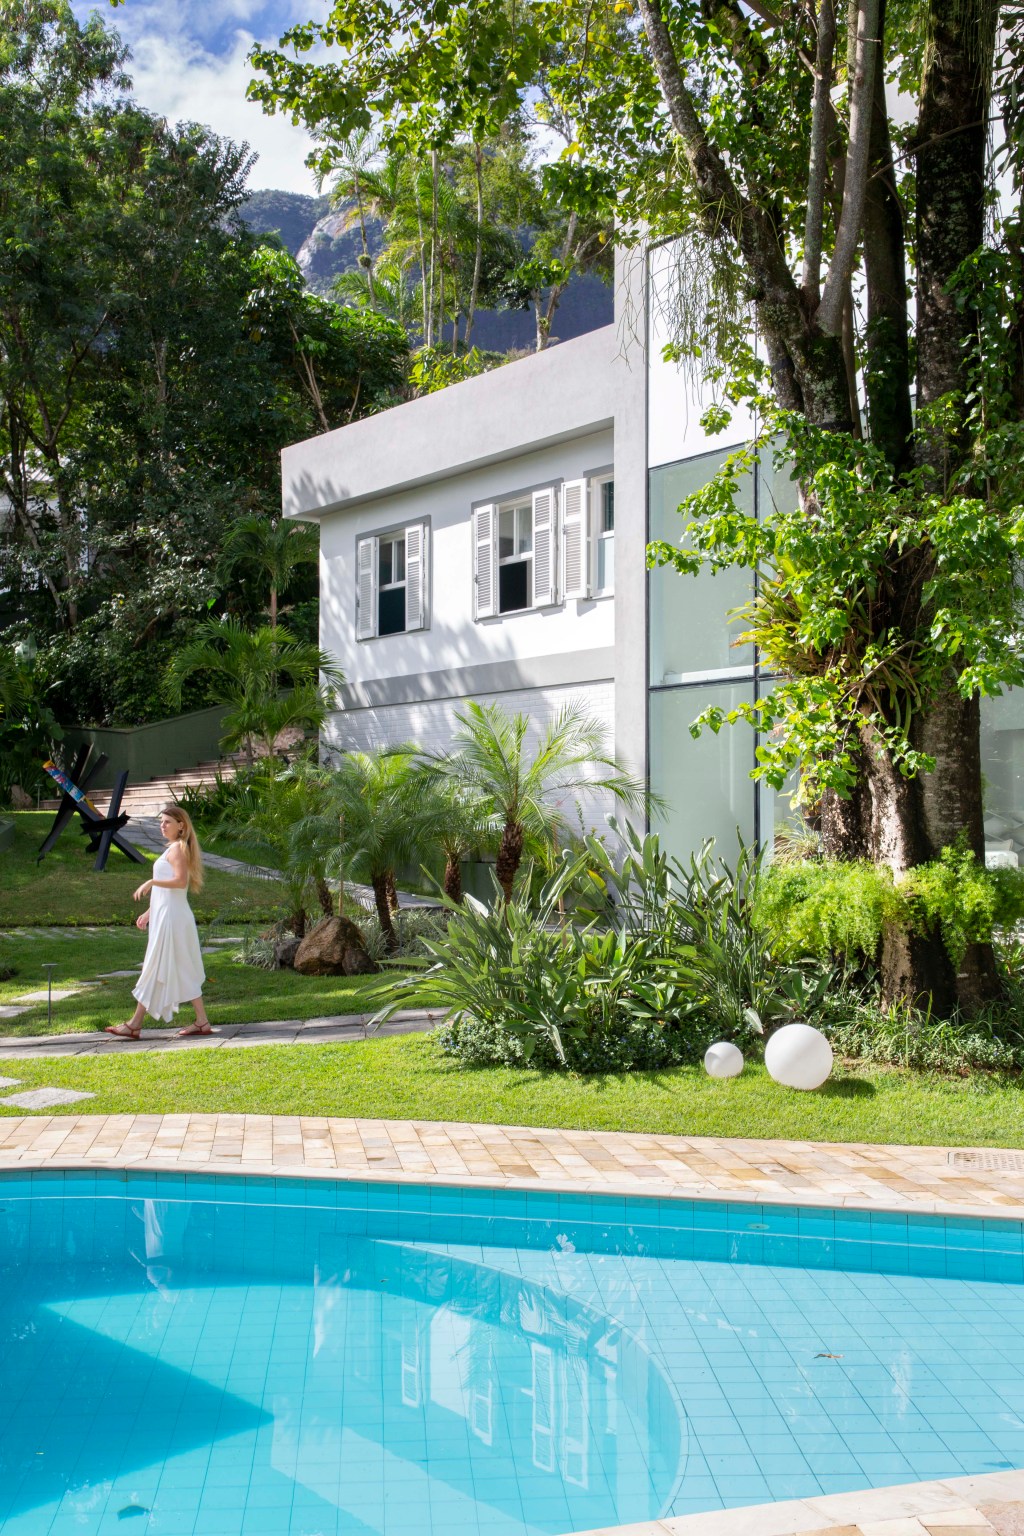 Anna Luiza Rothier paisagismo casa no campo jardim rio de janeiro plantas piscina